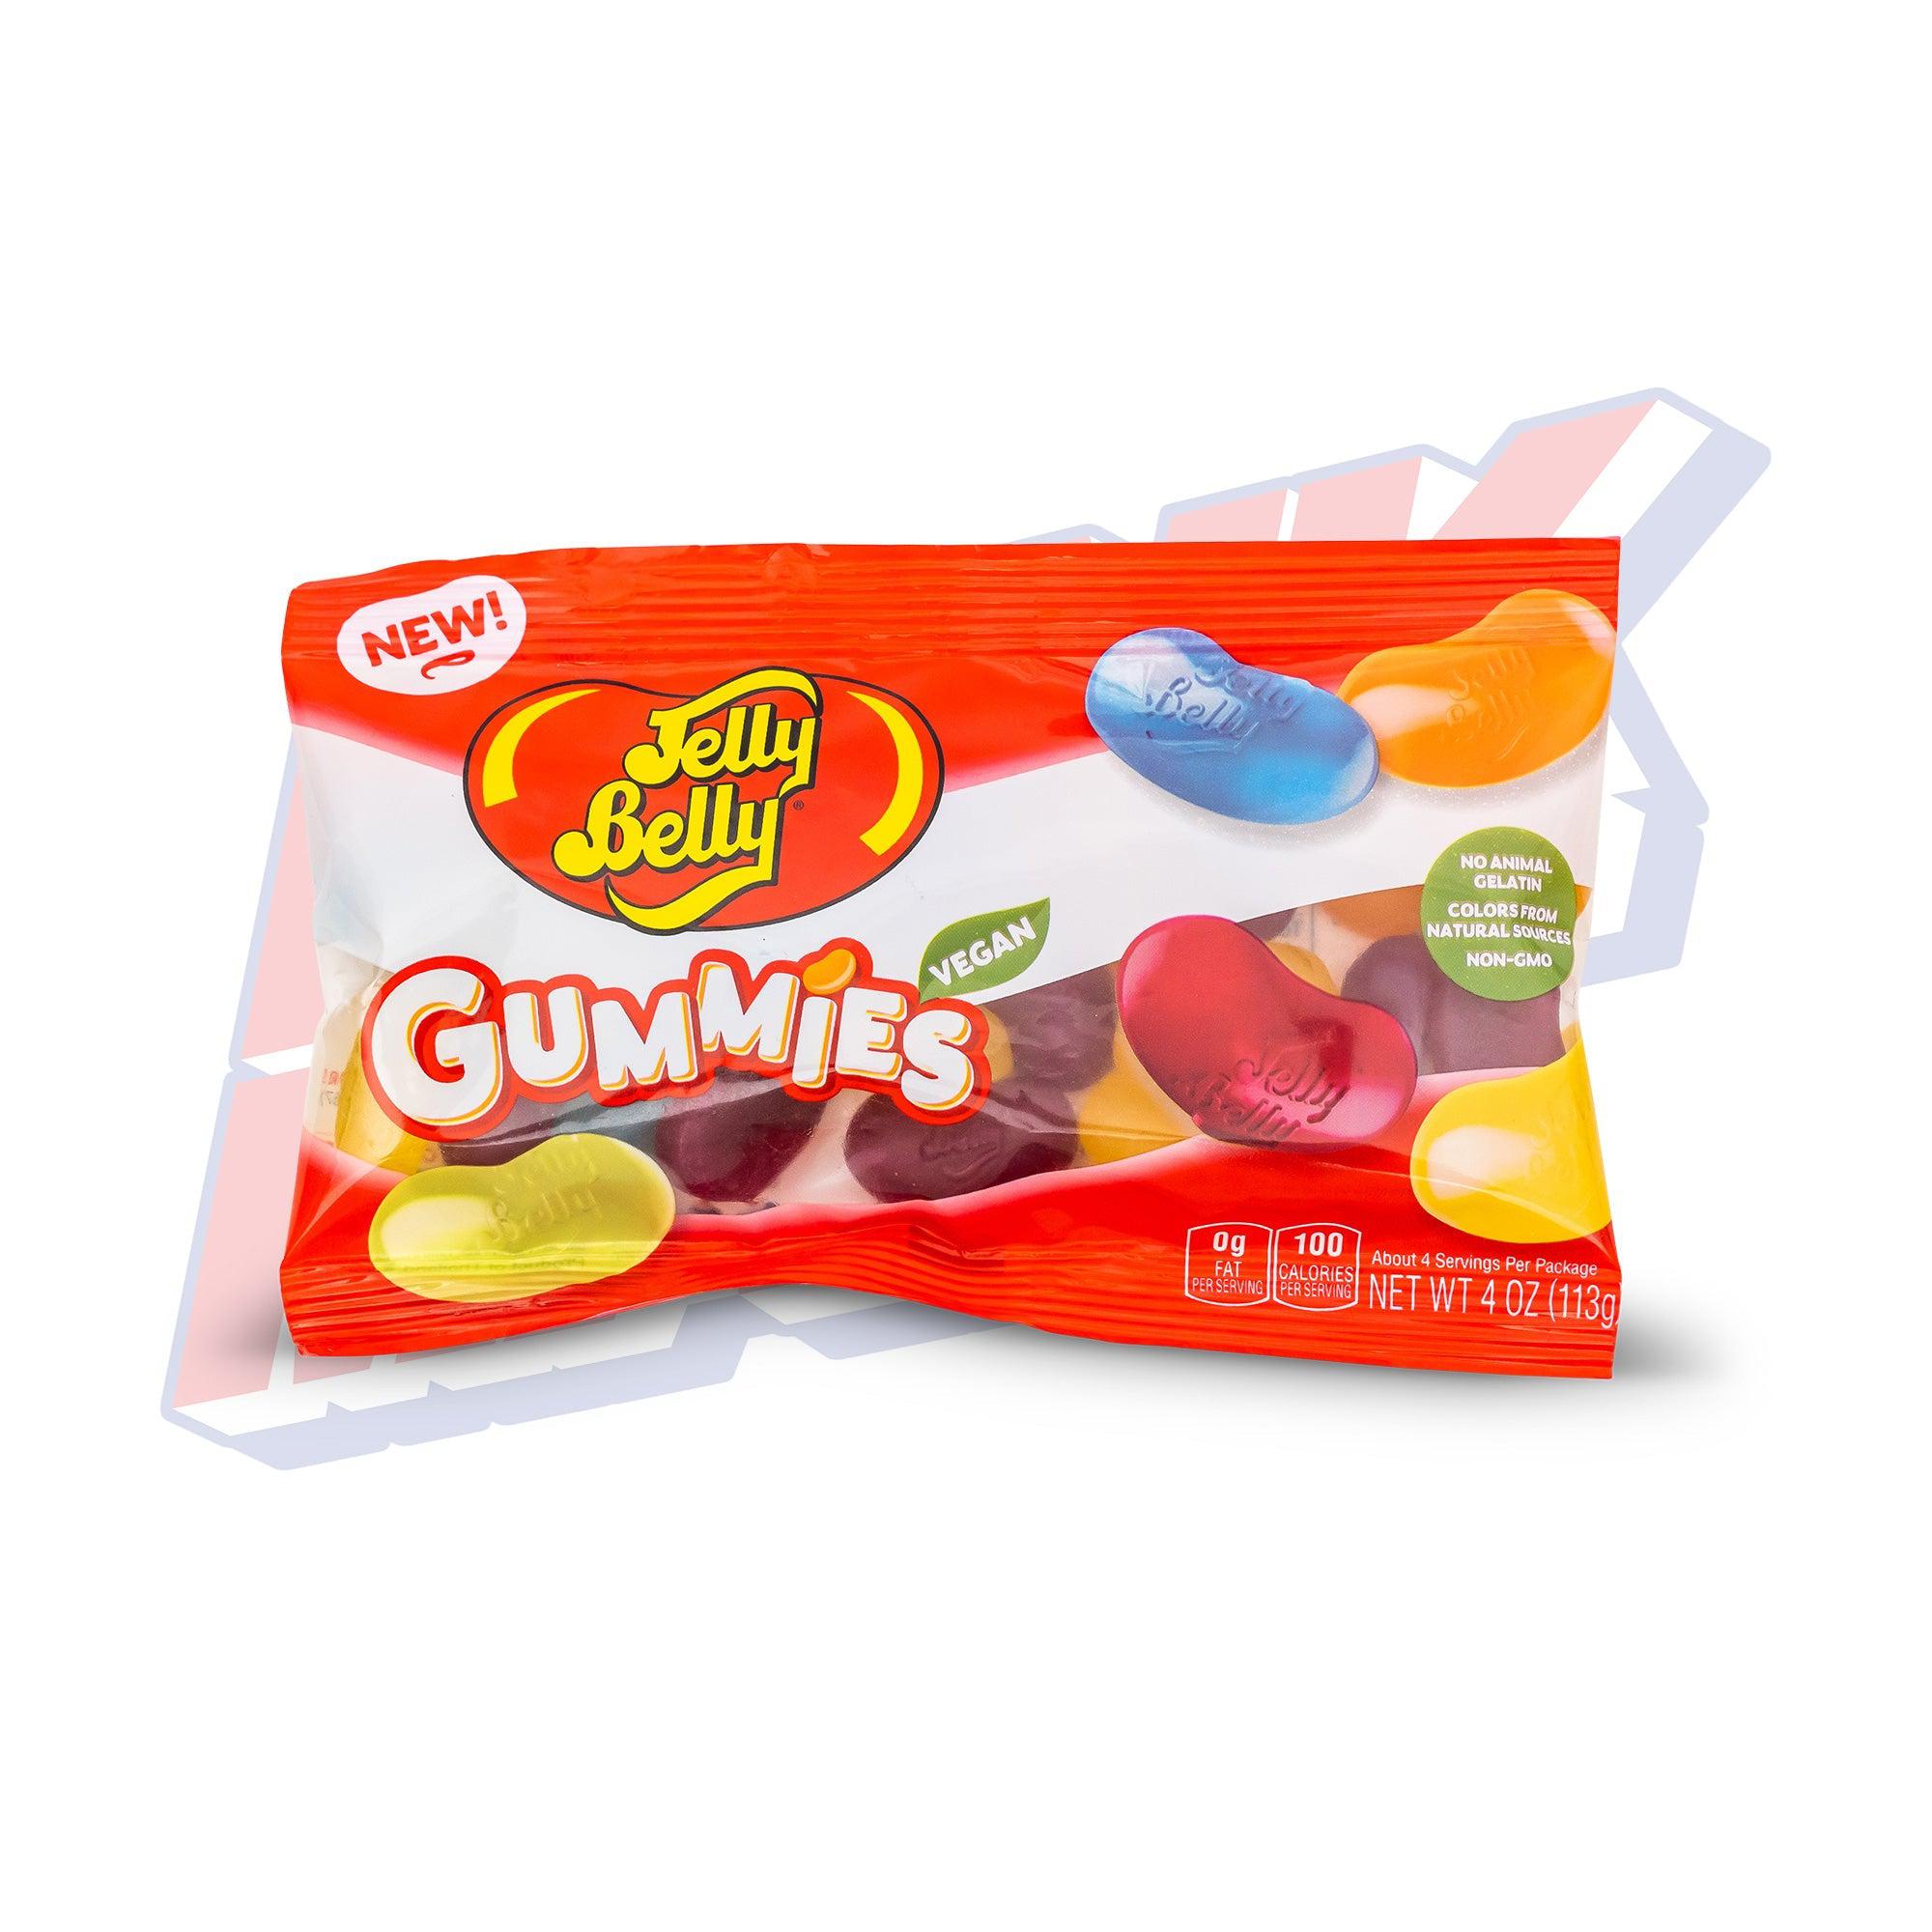 Jelly Belly Gummies - 113g